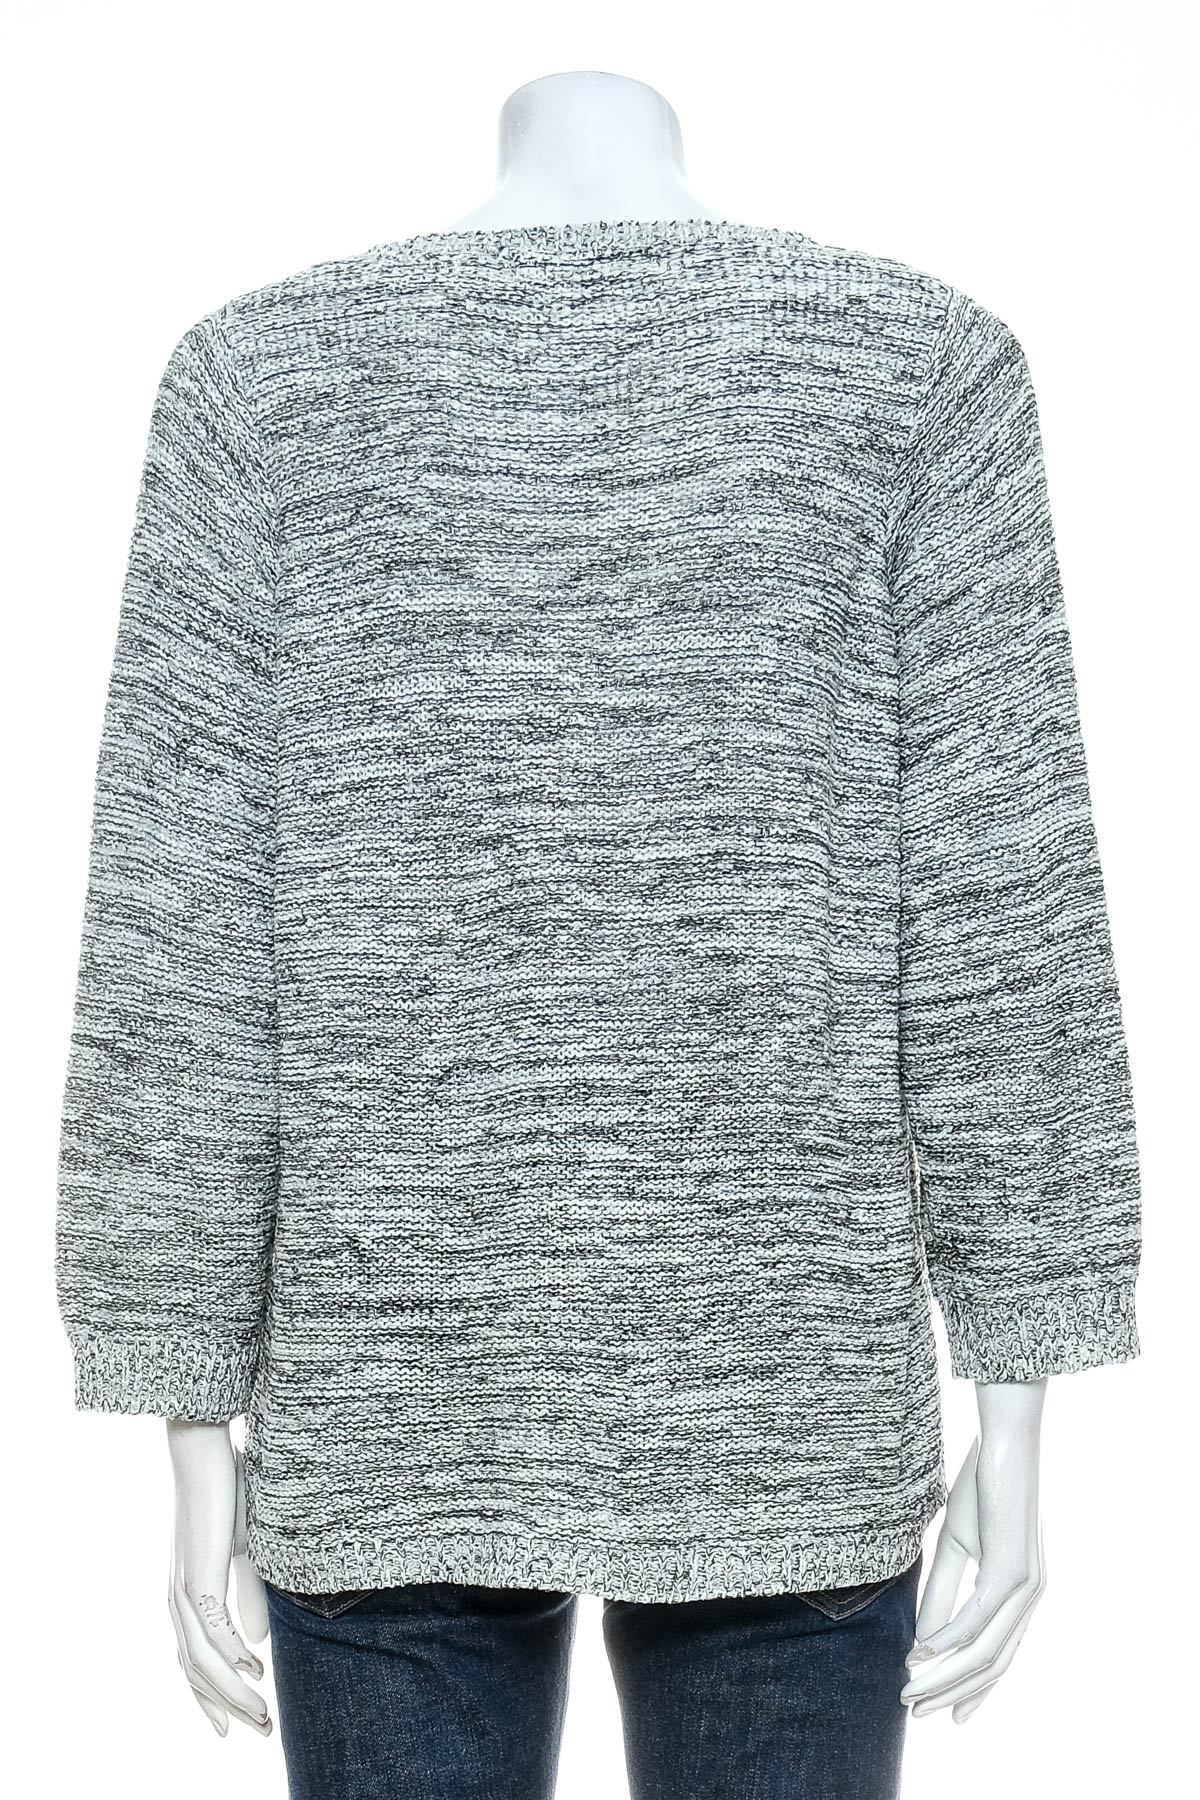 Women's sweater - TOM TAILOR Denim - 1